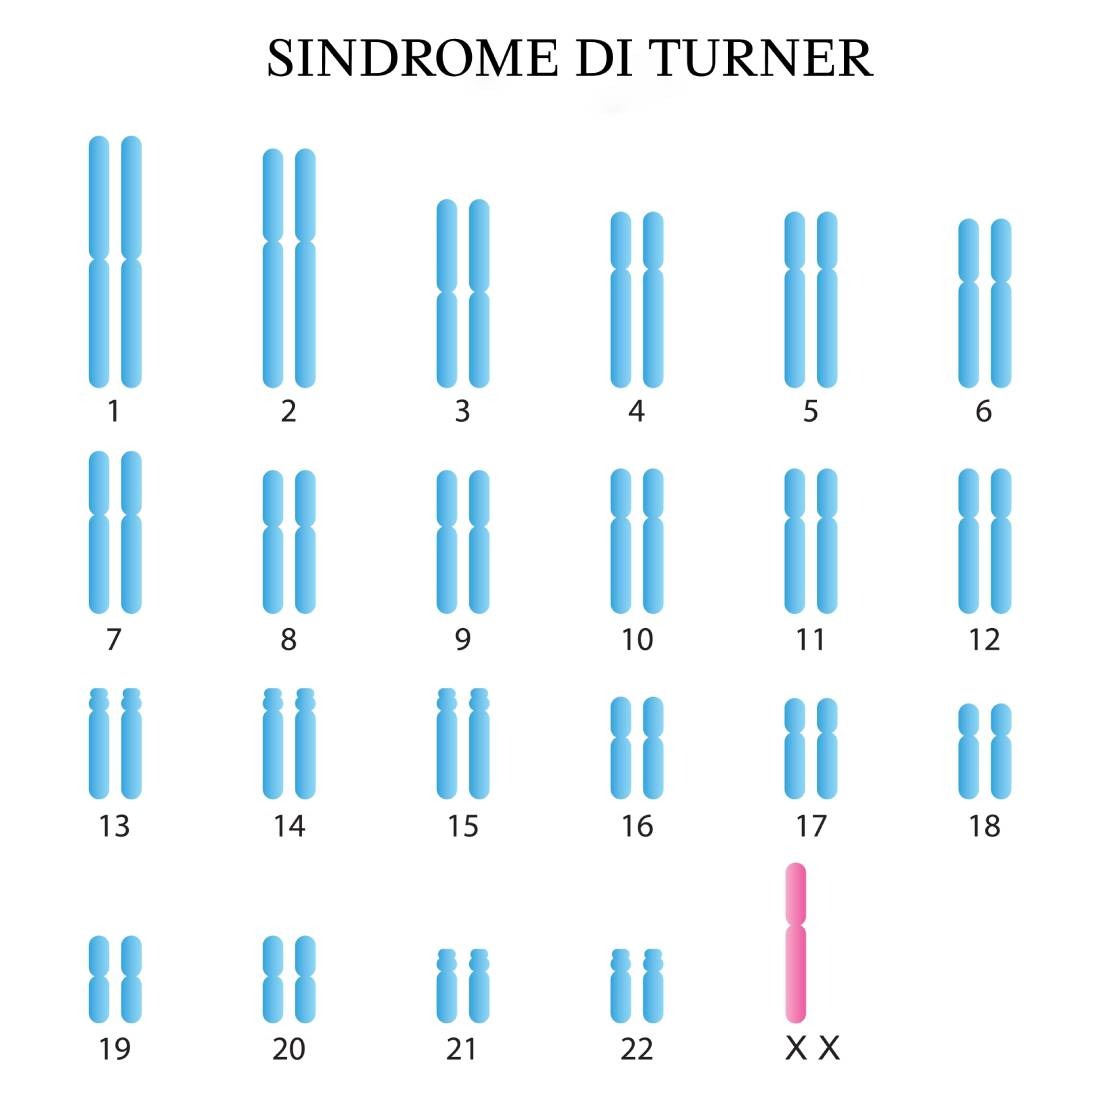 Sindrome di Turner